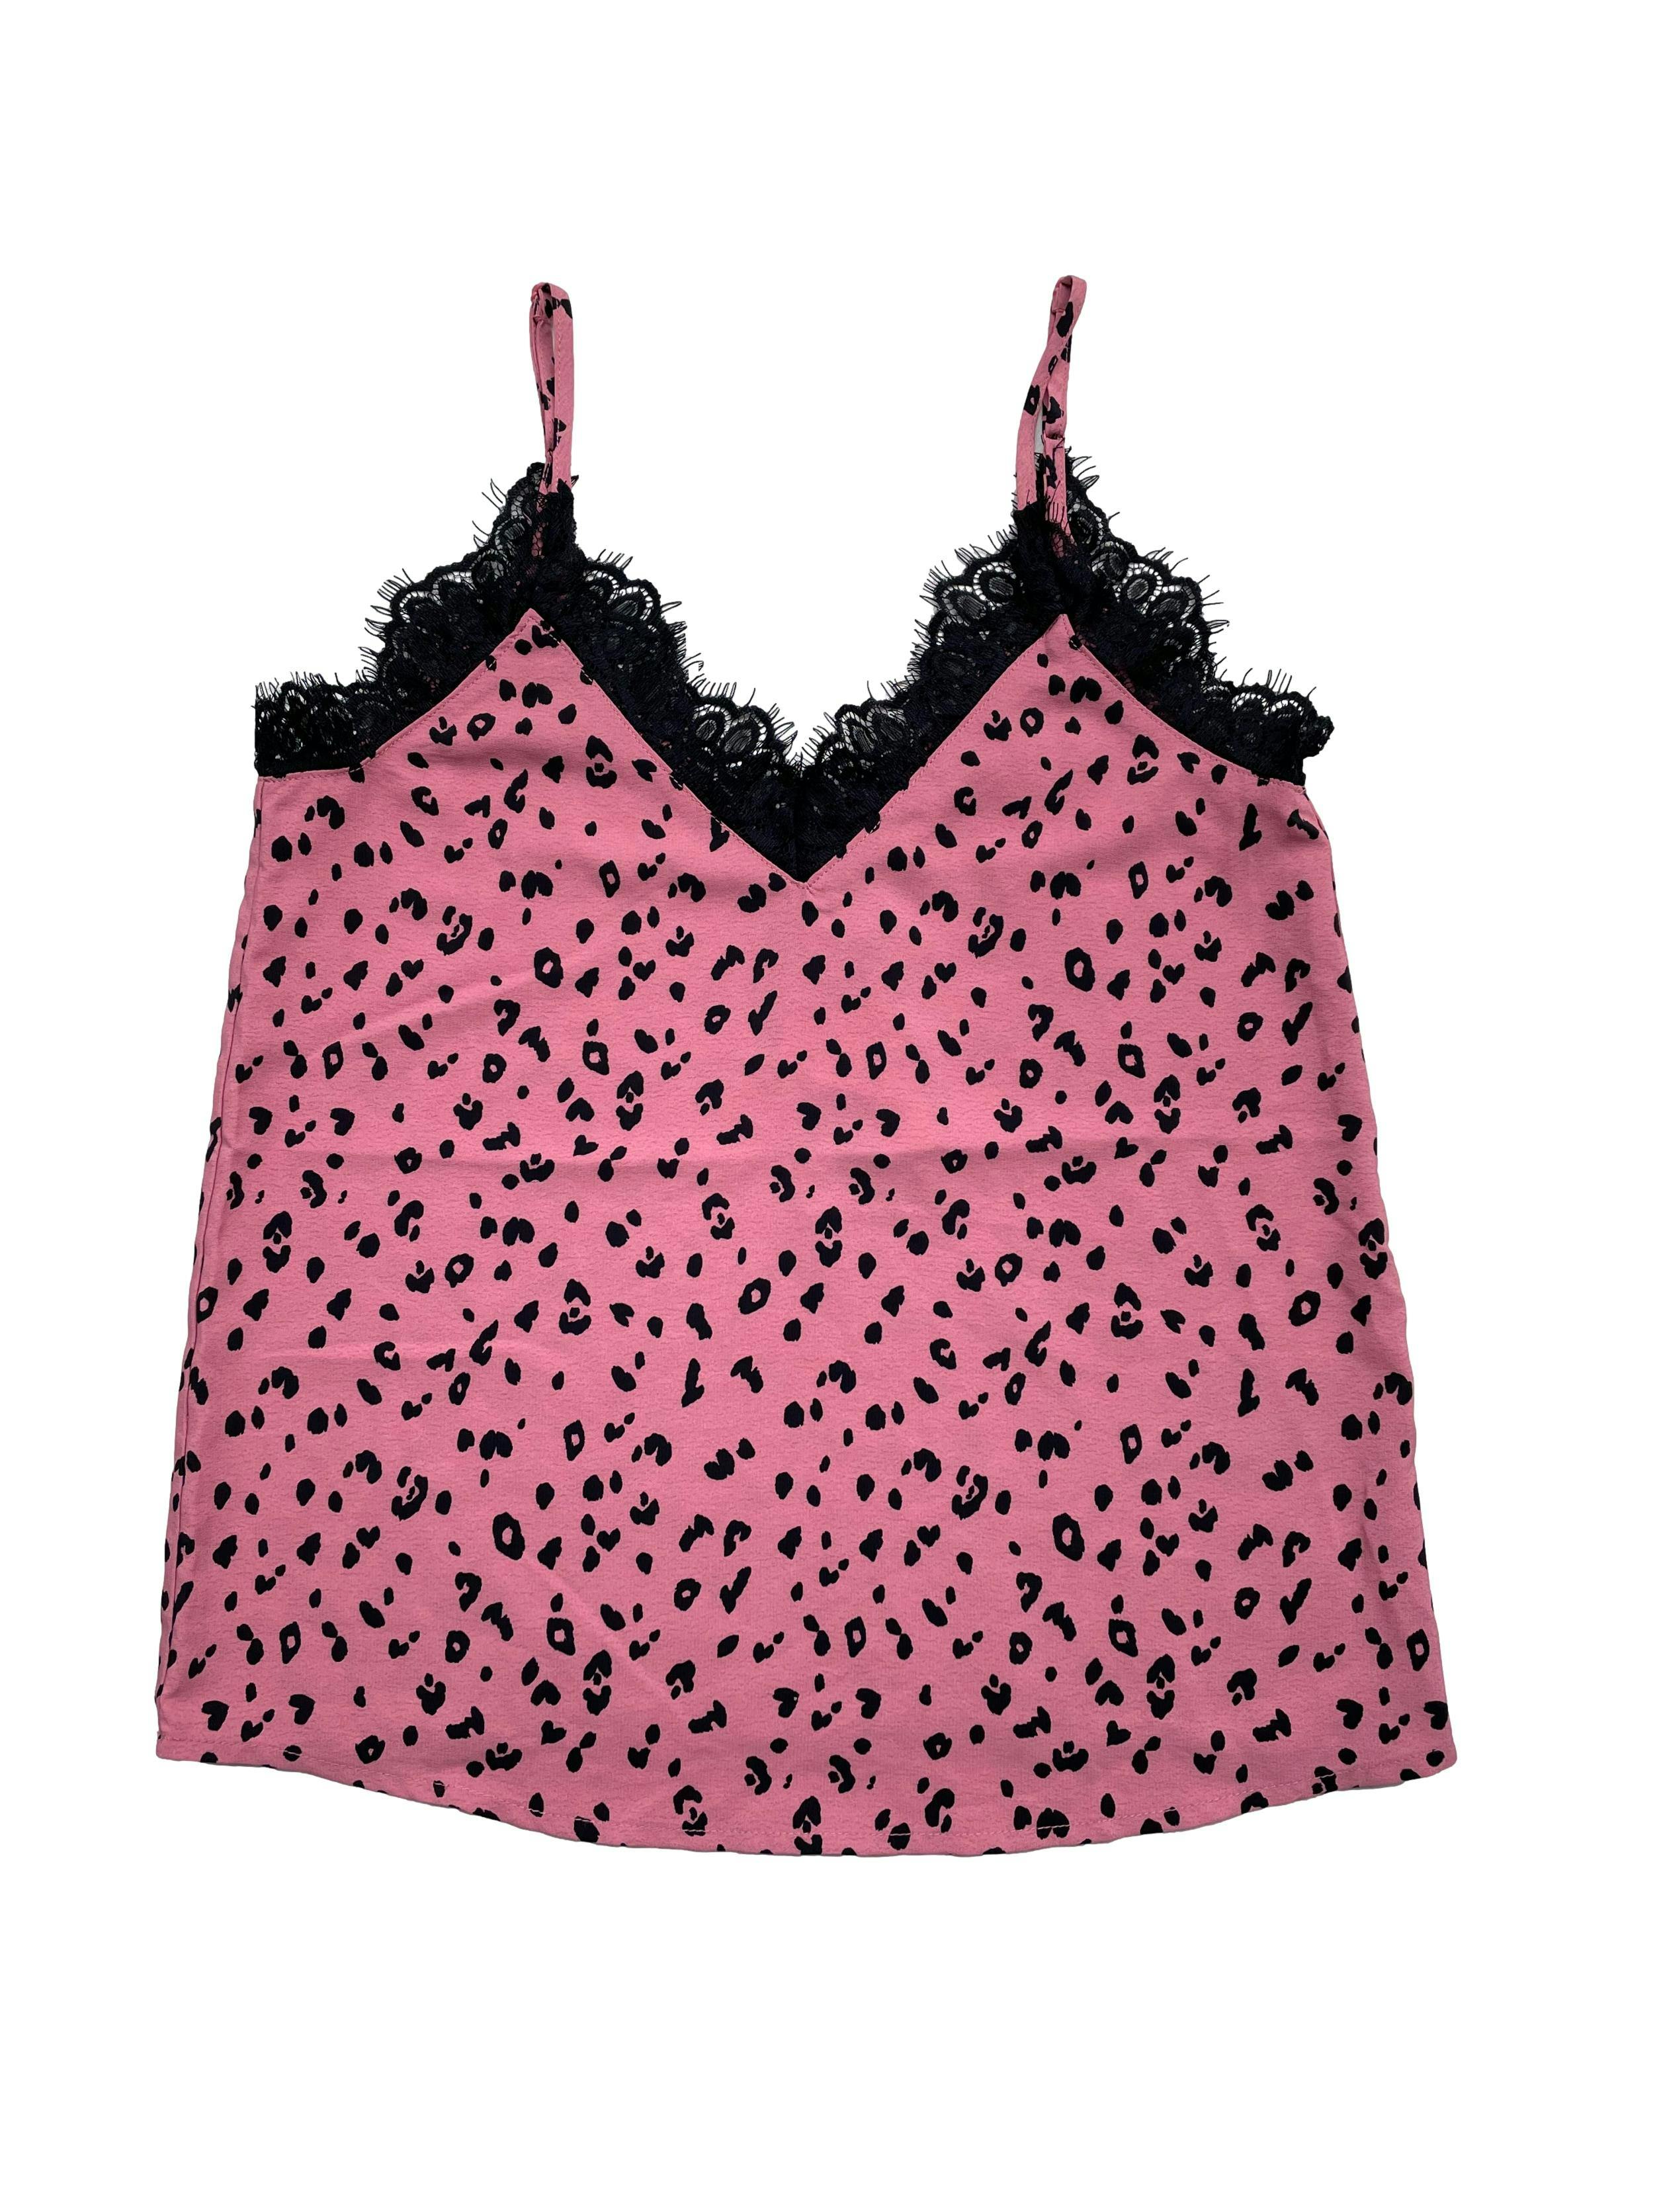 Blusa lencera H&M  tela plana animal print rosa y negro con encaje. Busto 84cm Largo 56cm. Nuva con etiqueta